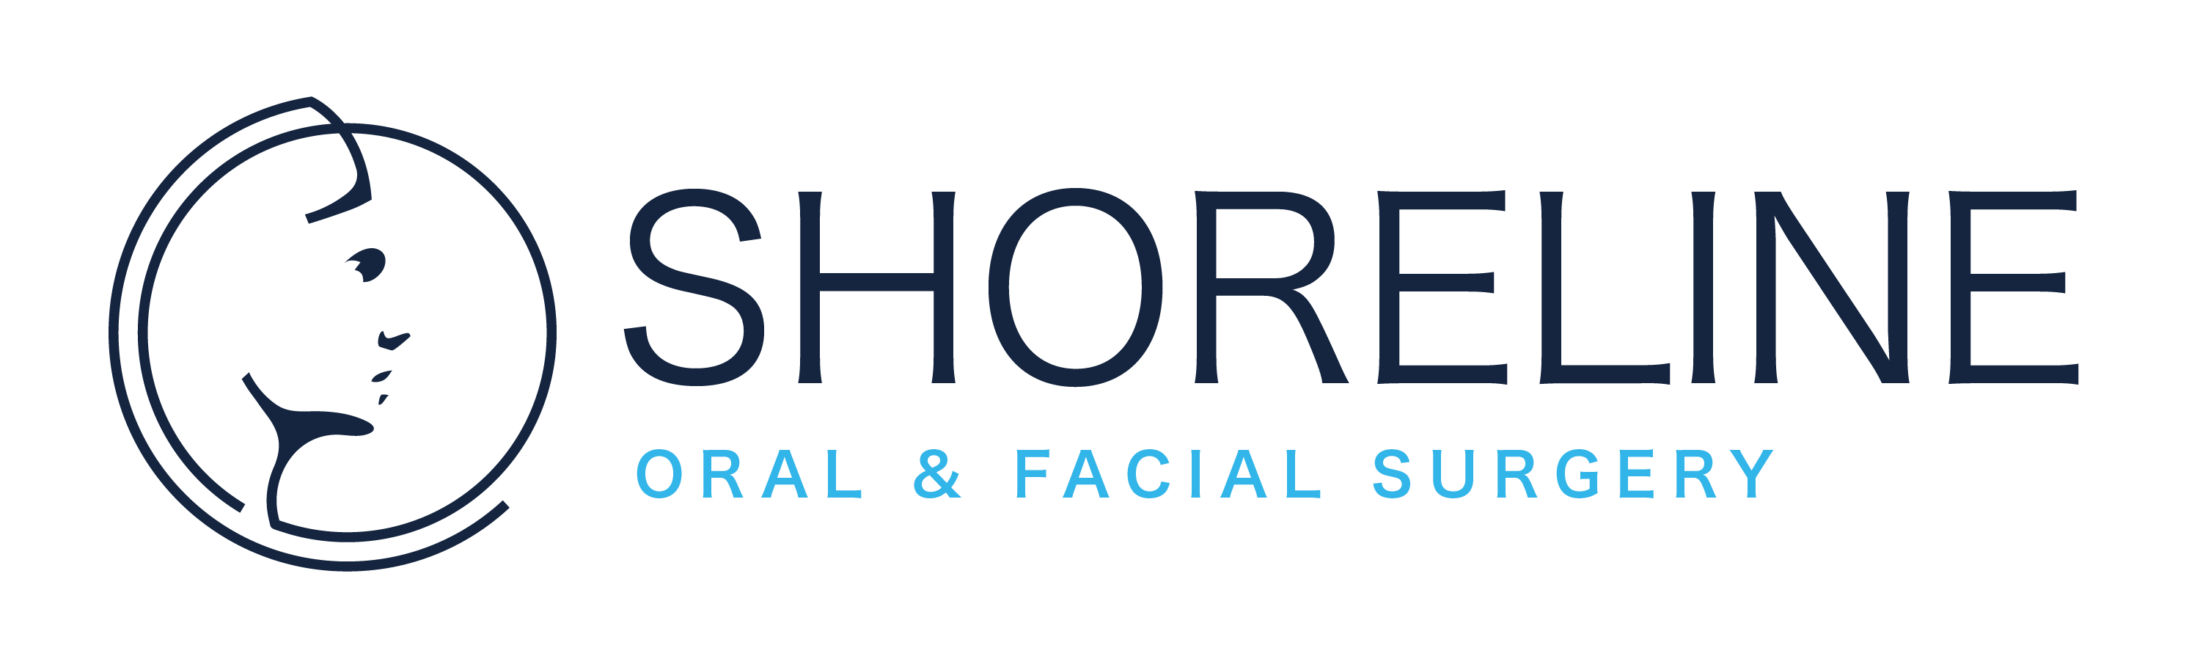 Link to Shoreline Oral & Facial Surgery home page